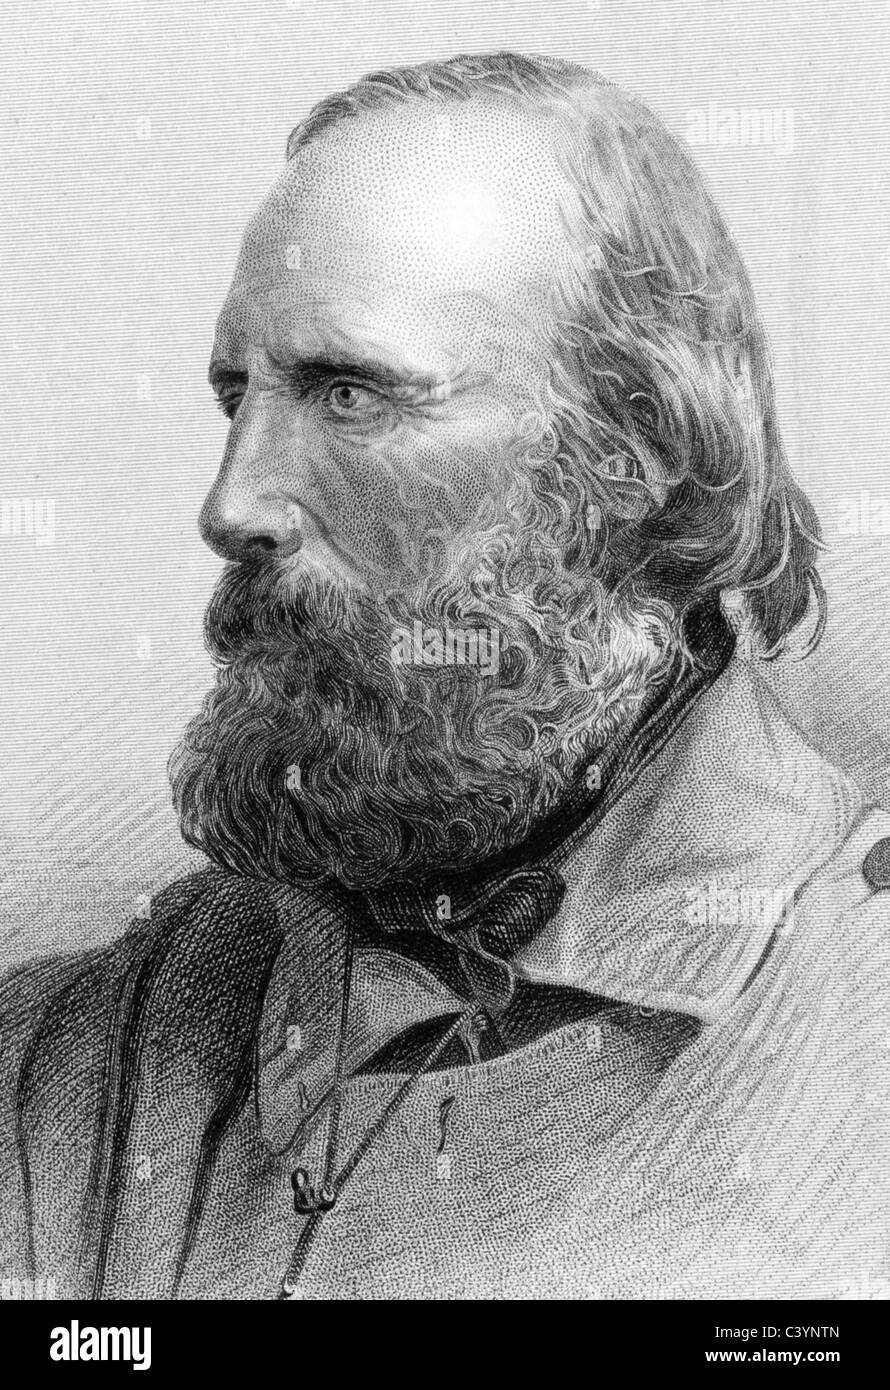 Giuseppe Garibaldi (1807-1882) on engraving from 1800s. Italian military and political figure. Stock Photo